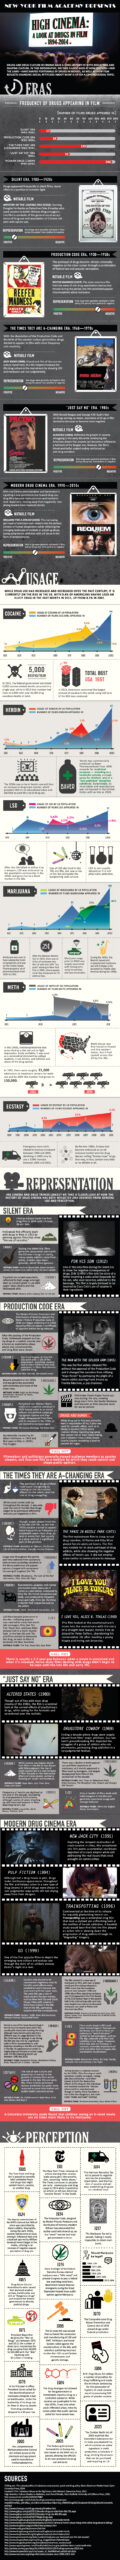 High Cinema Infographic by New York Film Academy